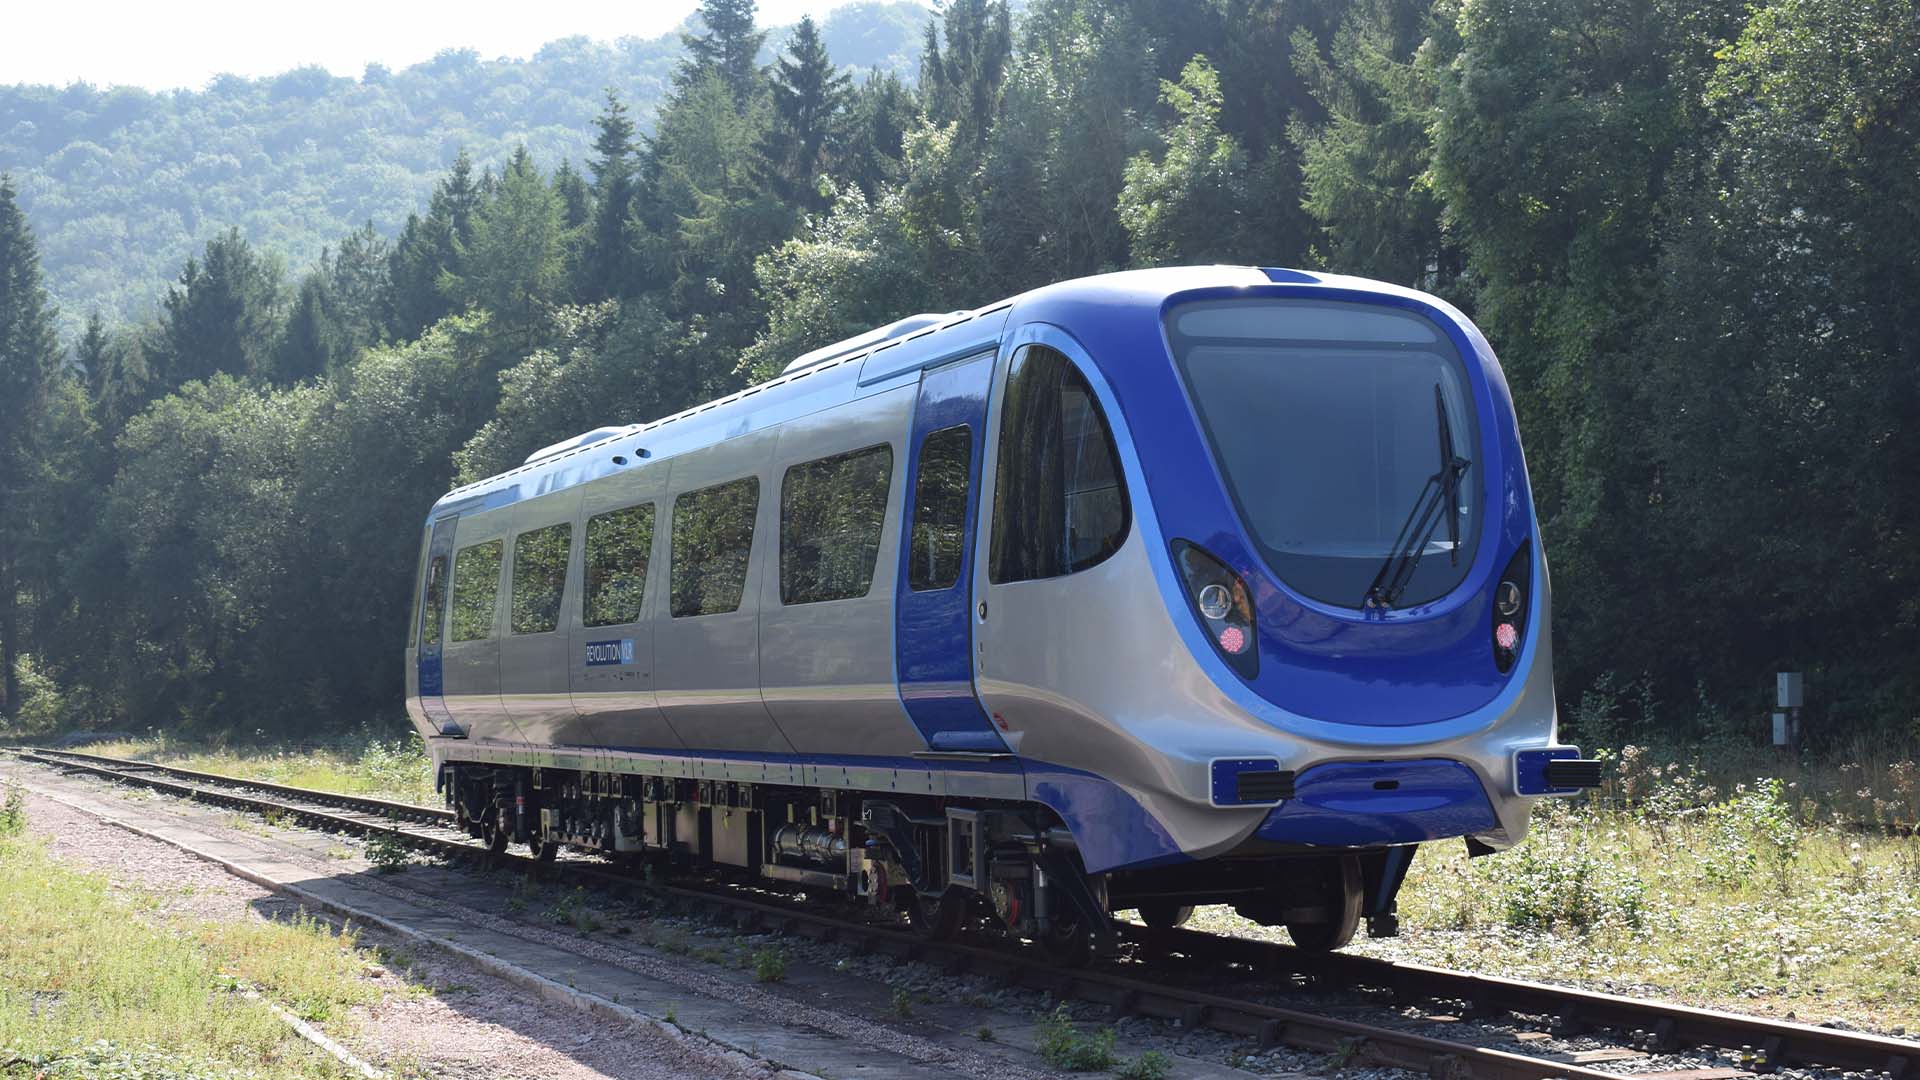 Revolution VLR train on track